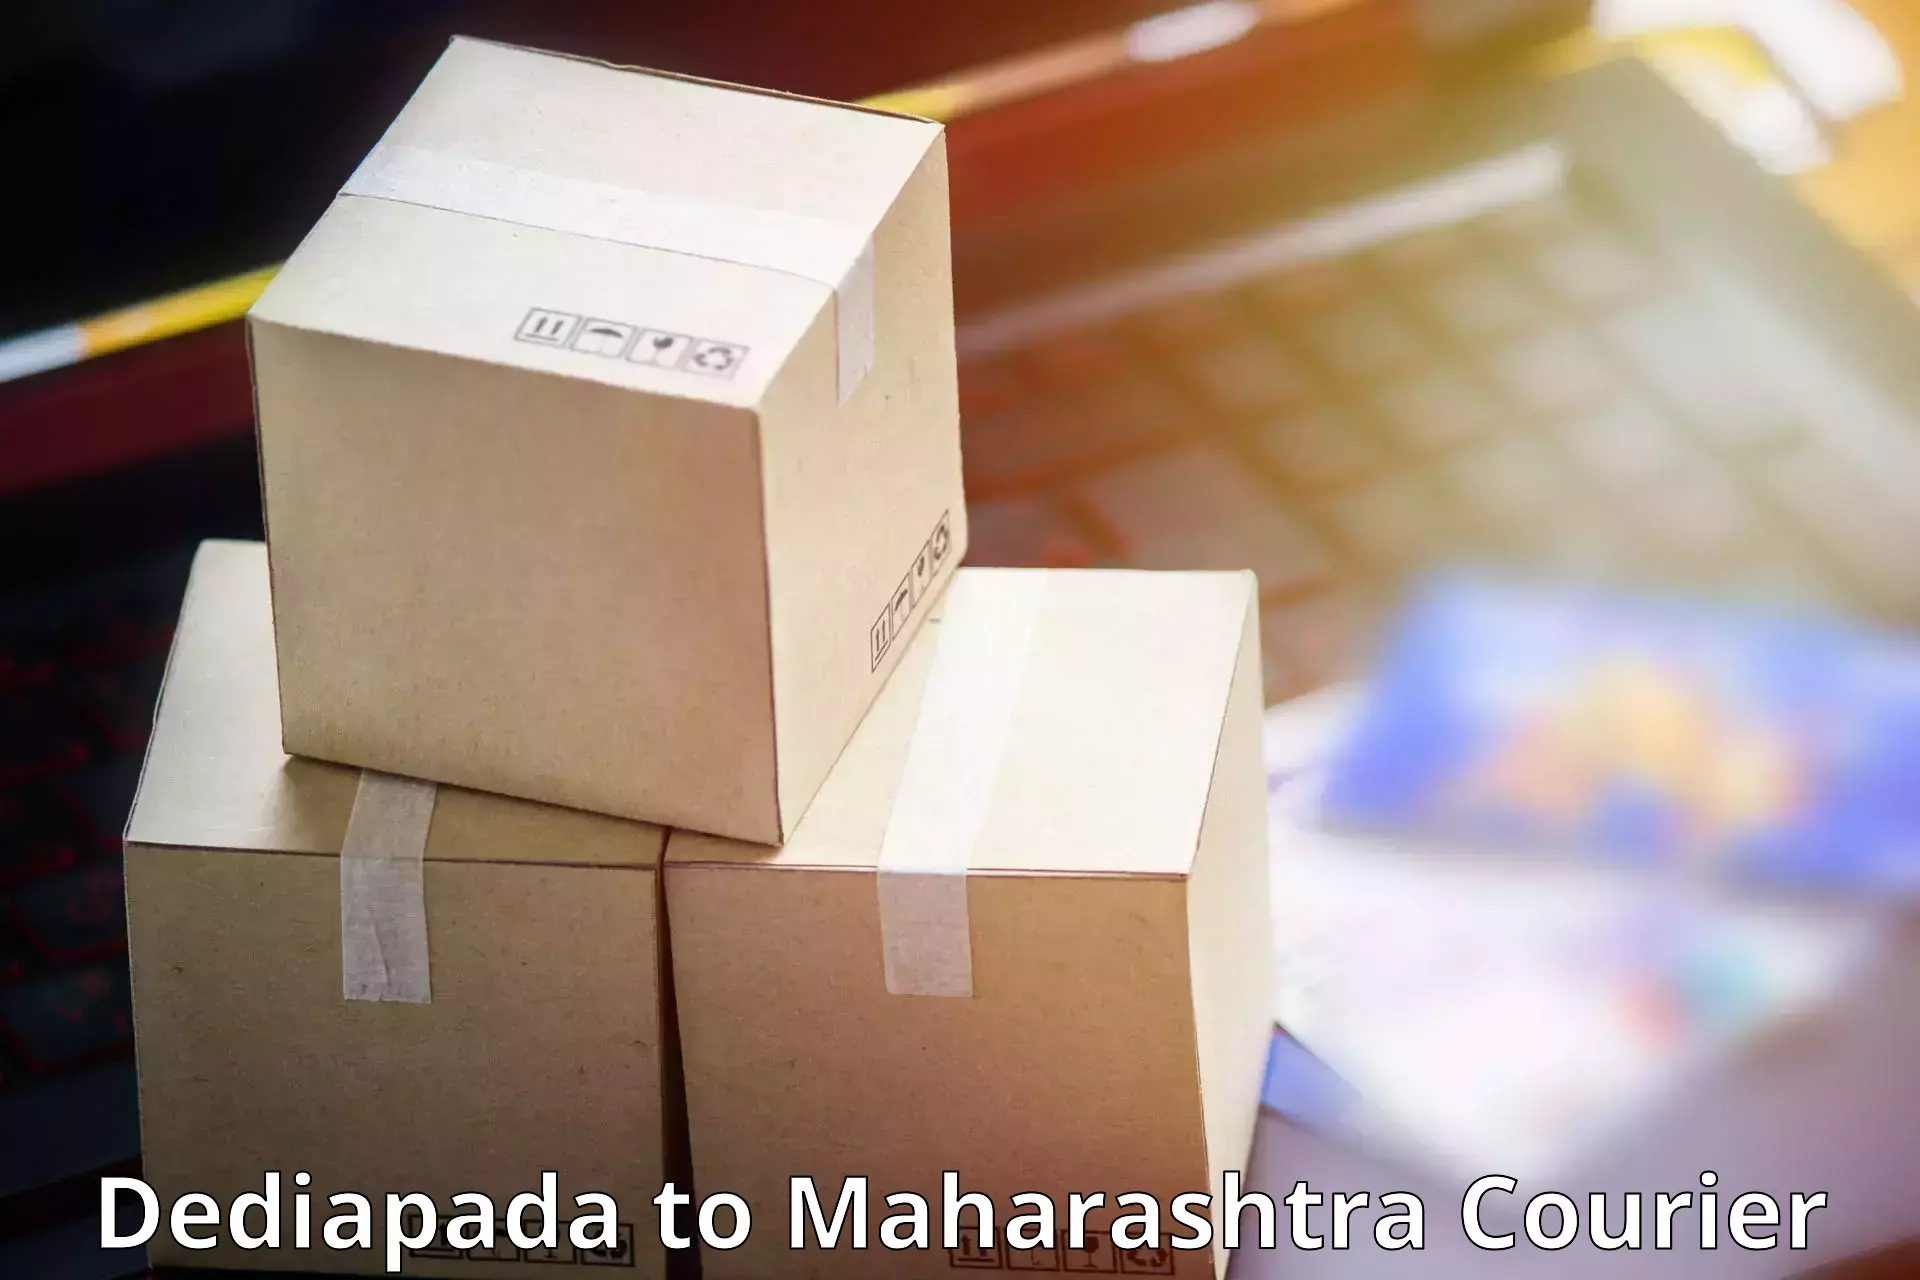 Premium delivery services Dediapada to Pune